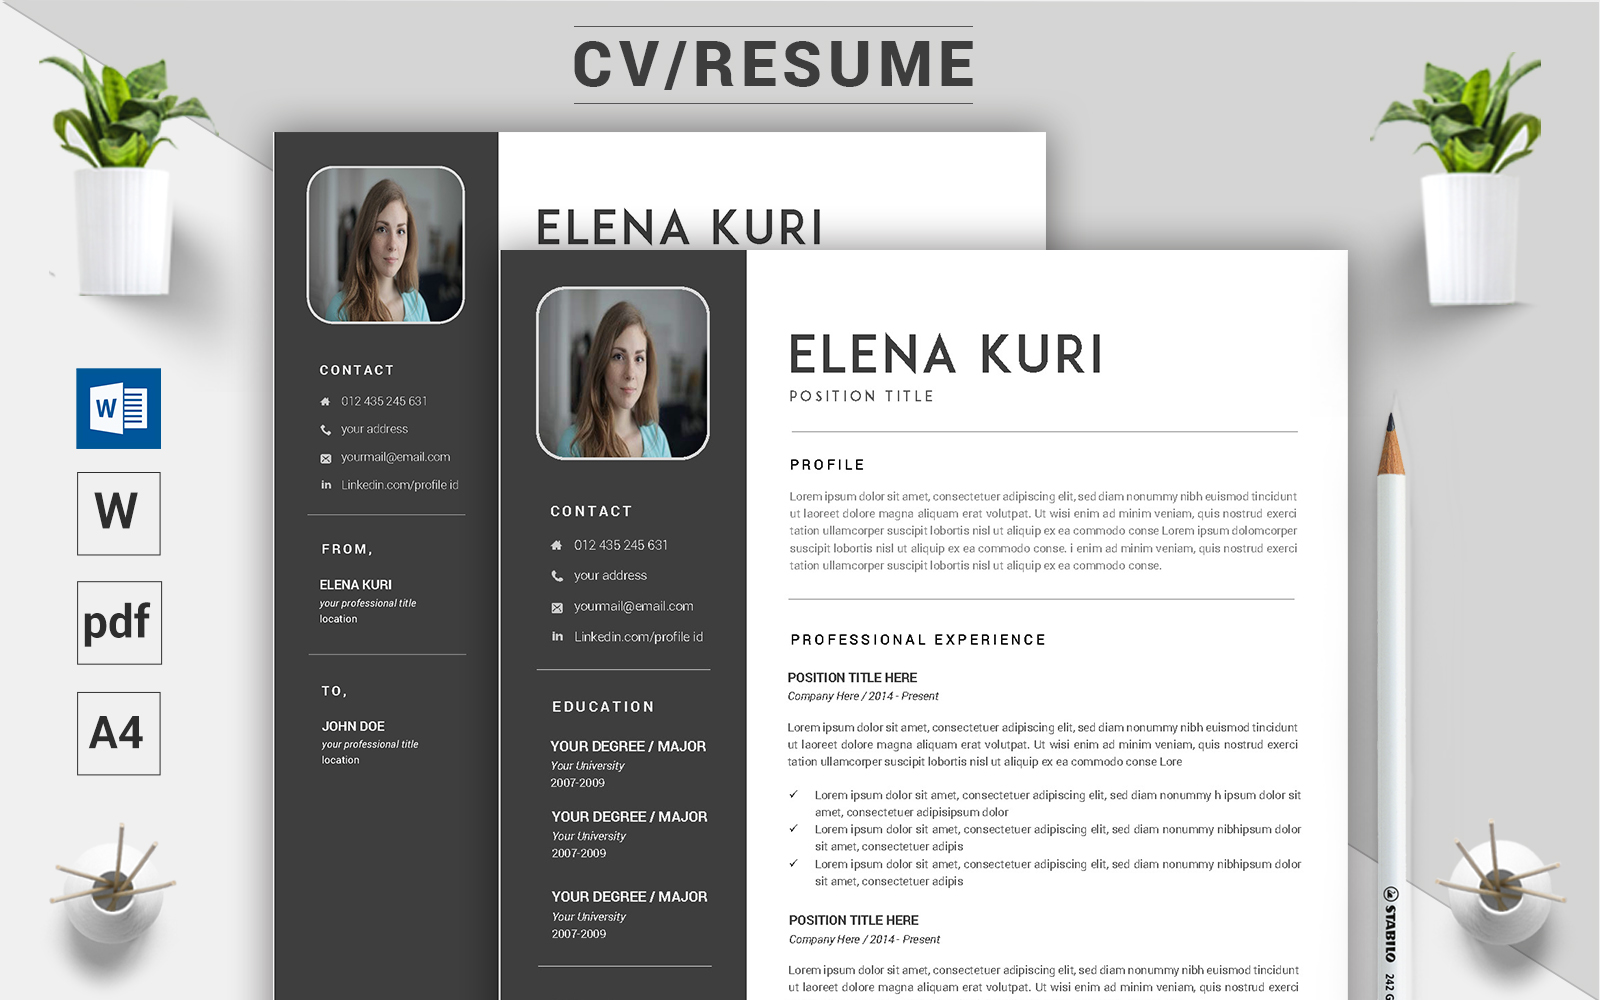 Elena Kuri - CV Resume Template